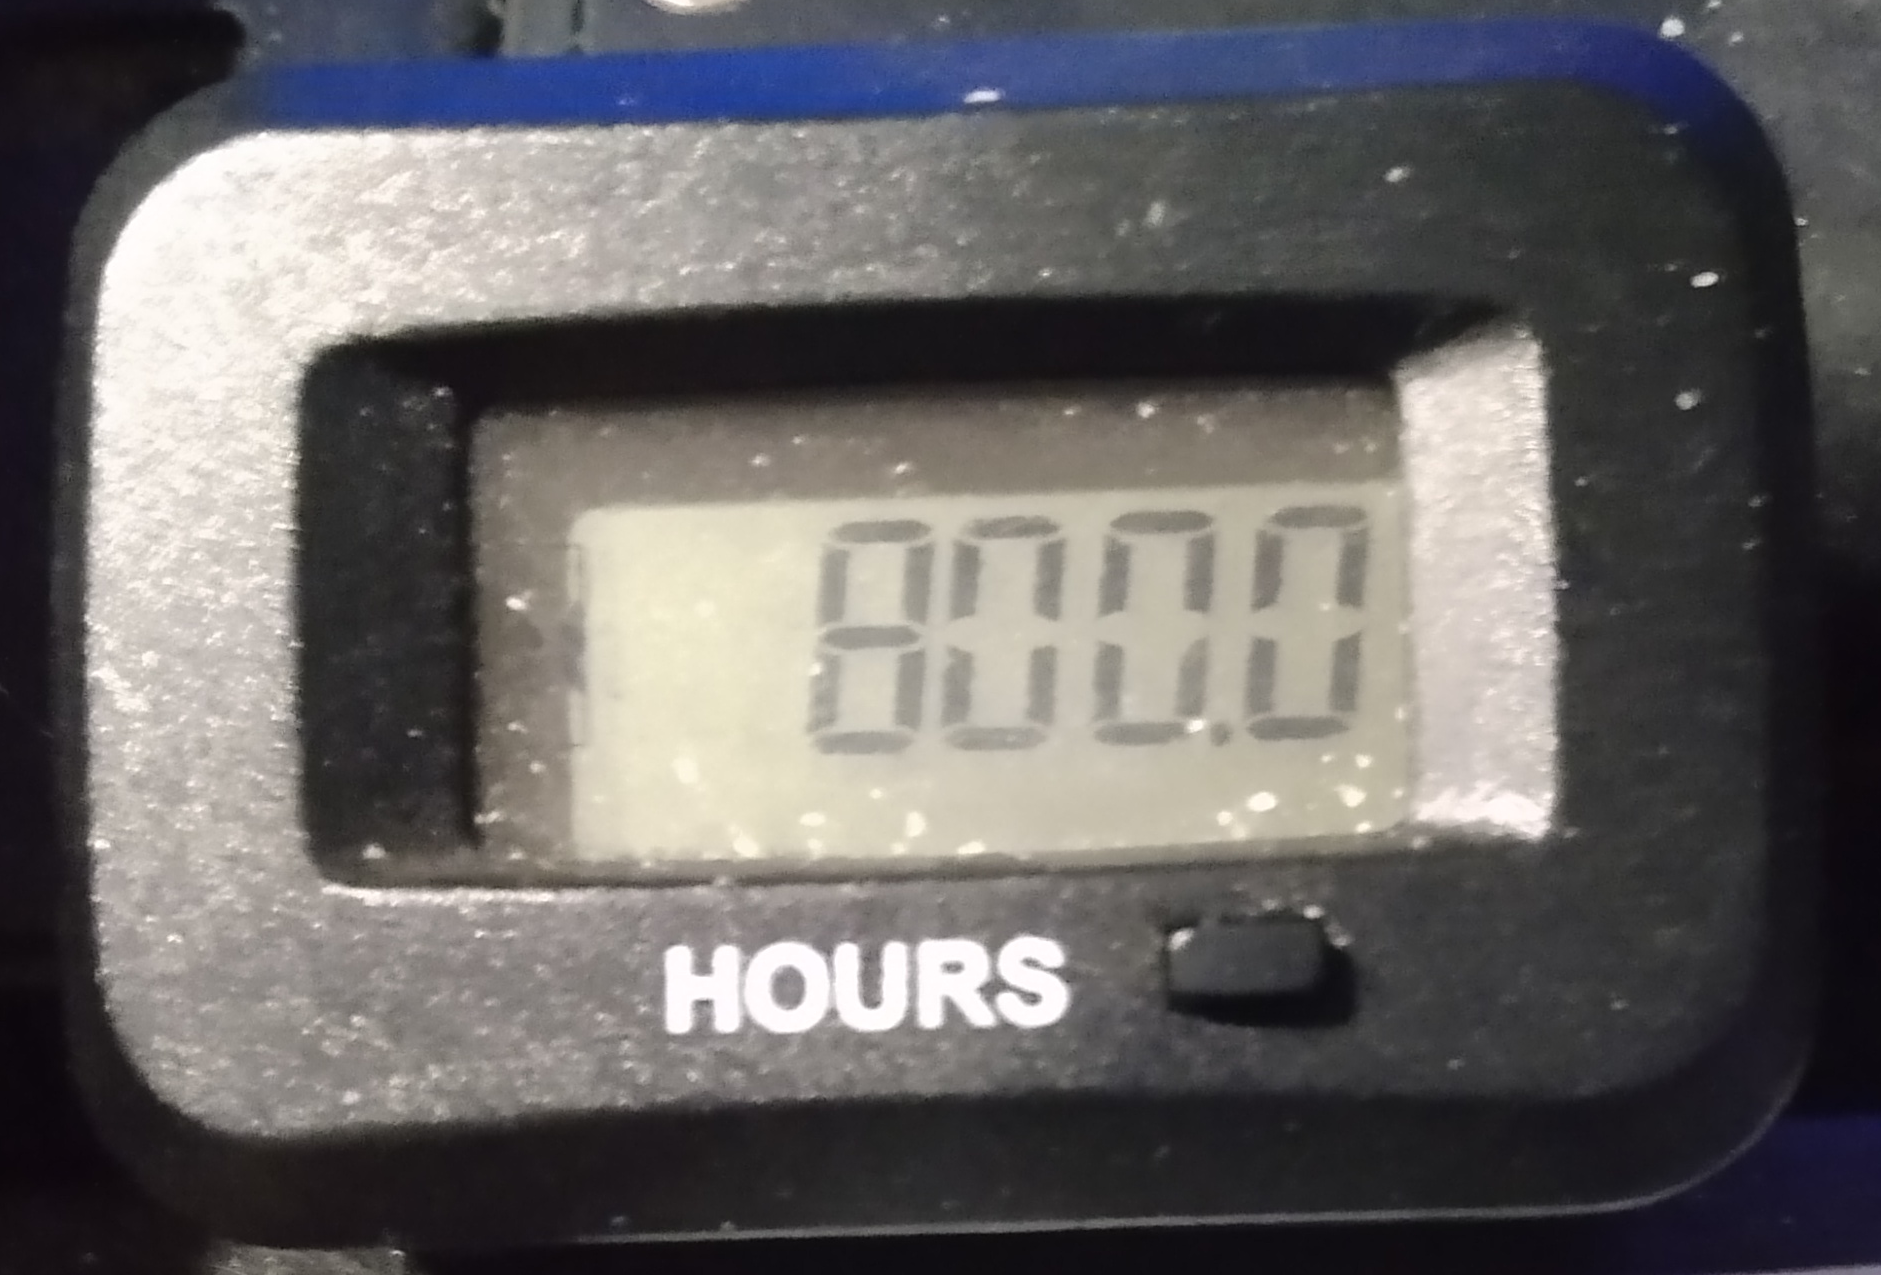 hour meter showing 800 hours